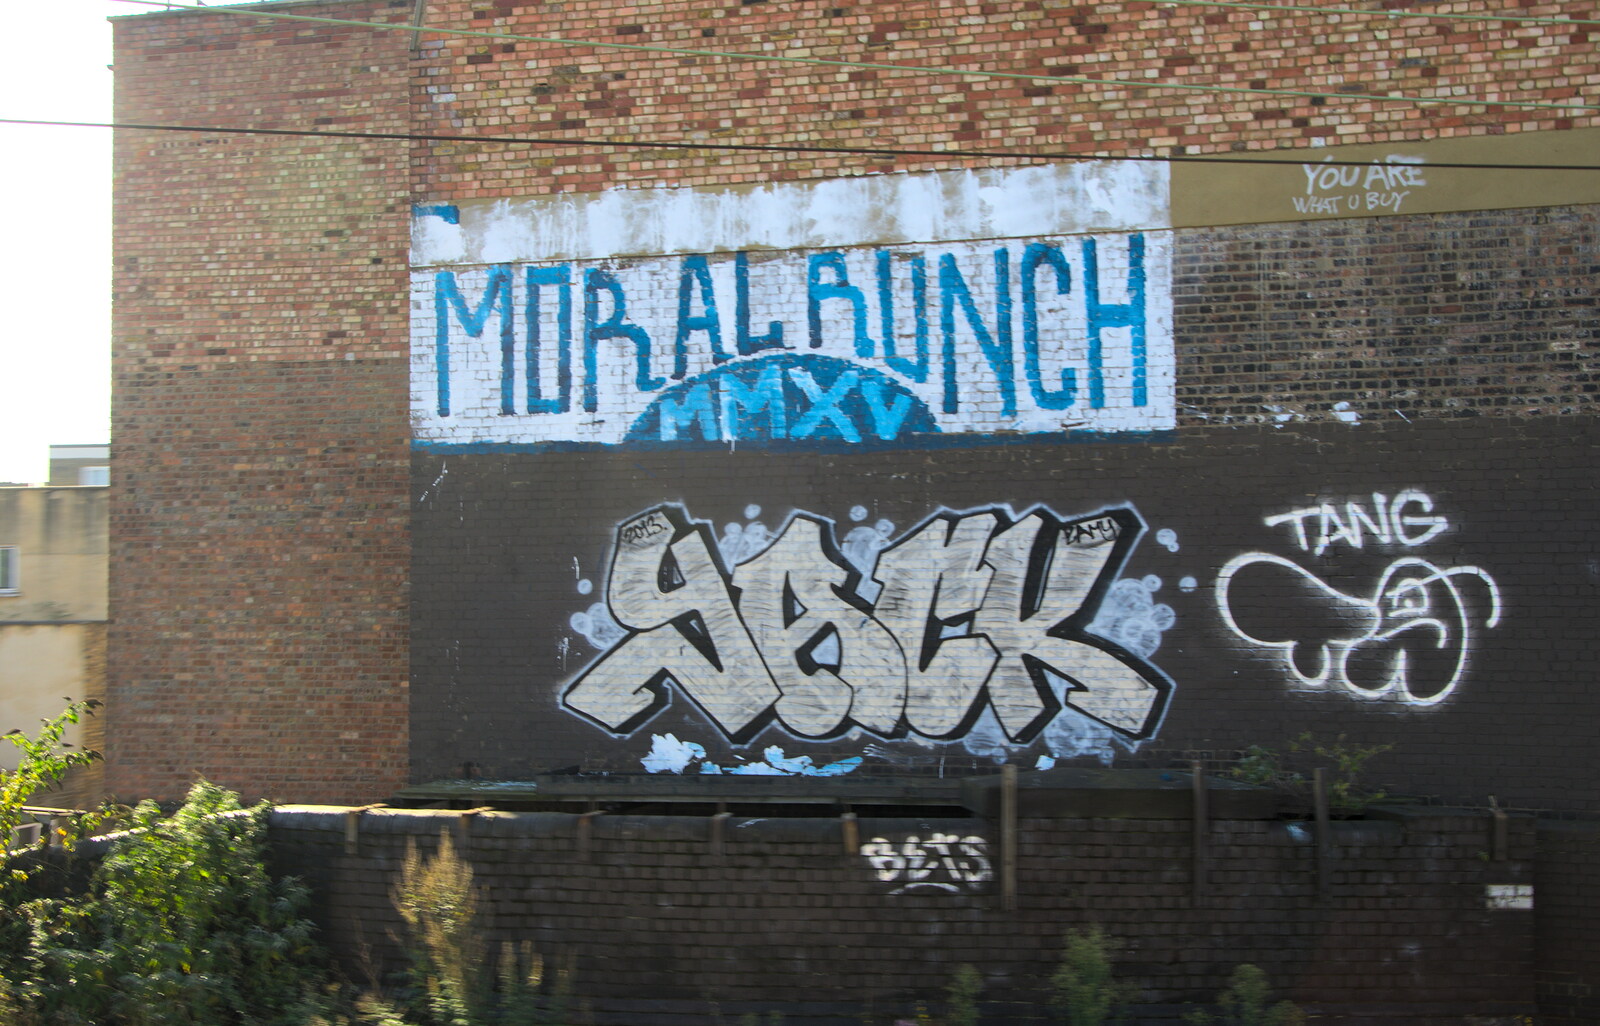 Moral Runch and Yack graffiti from SwiftKey Innovation Week, Southwark Bridge Road, London - 7th October 2015